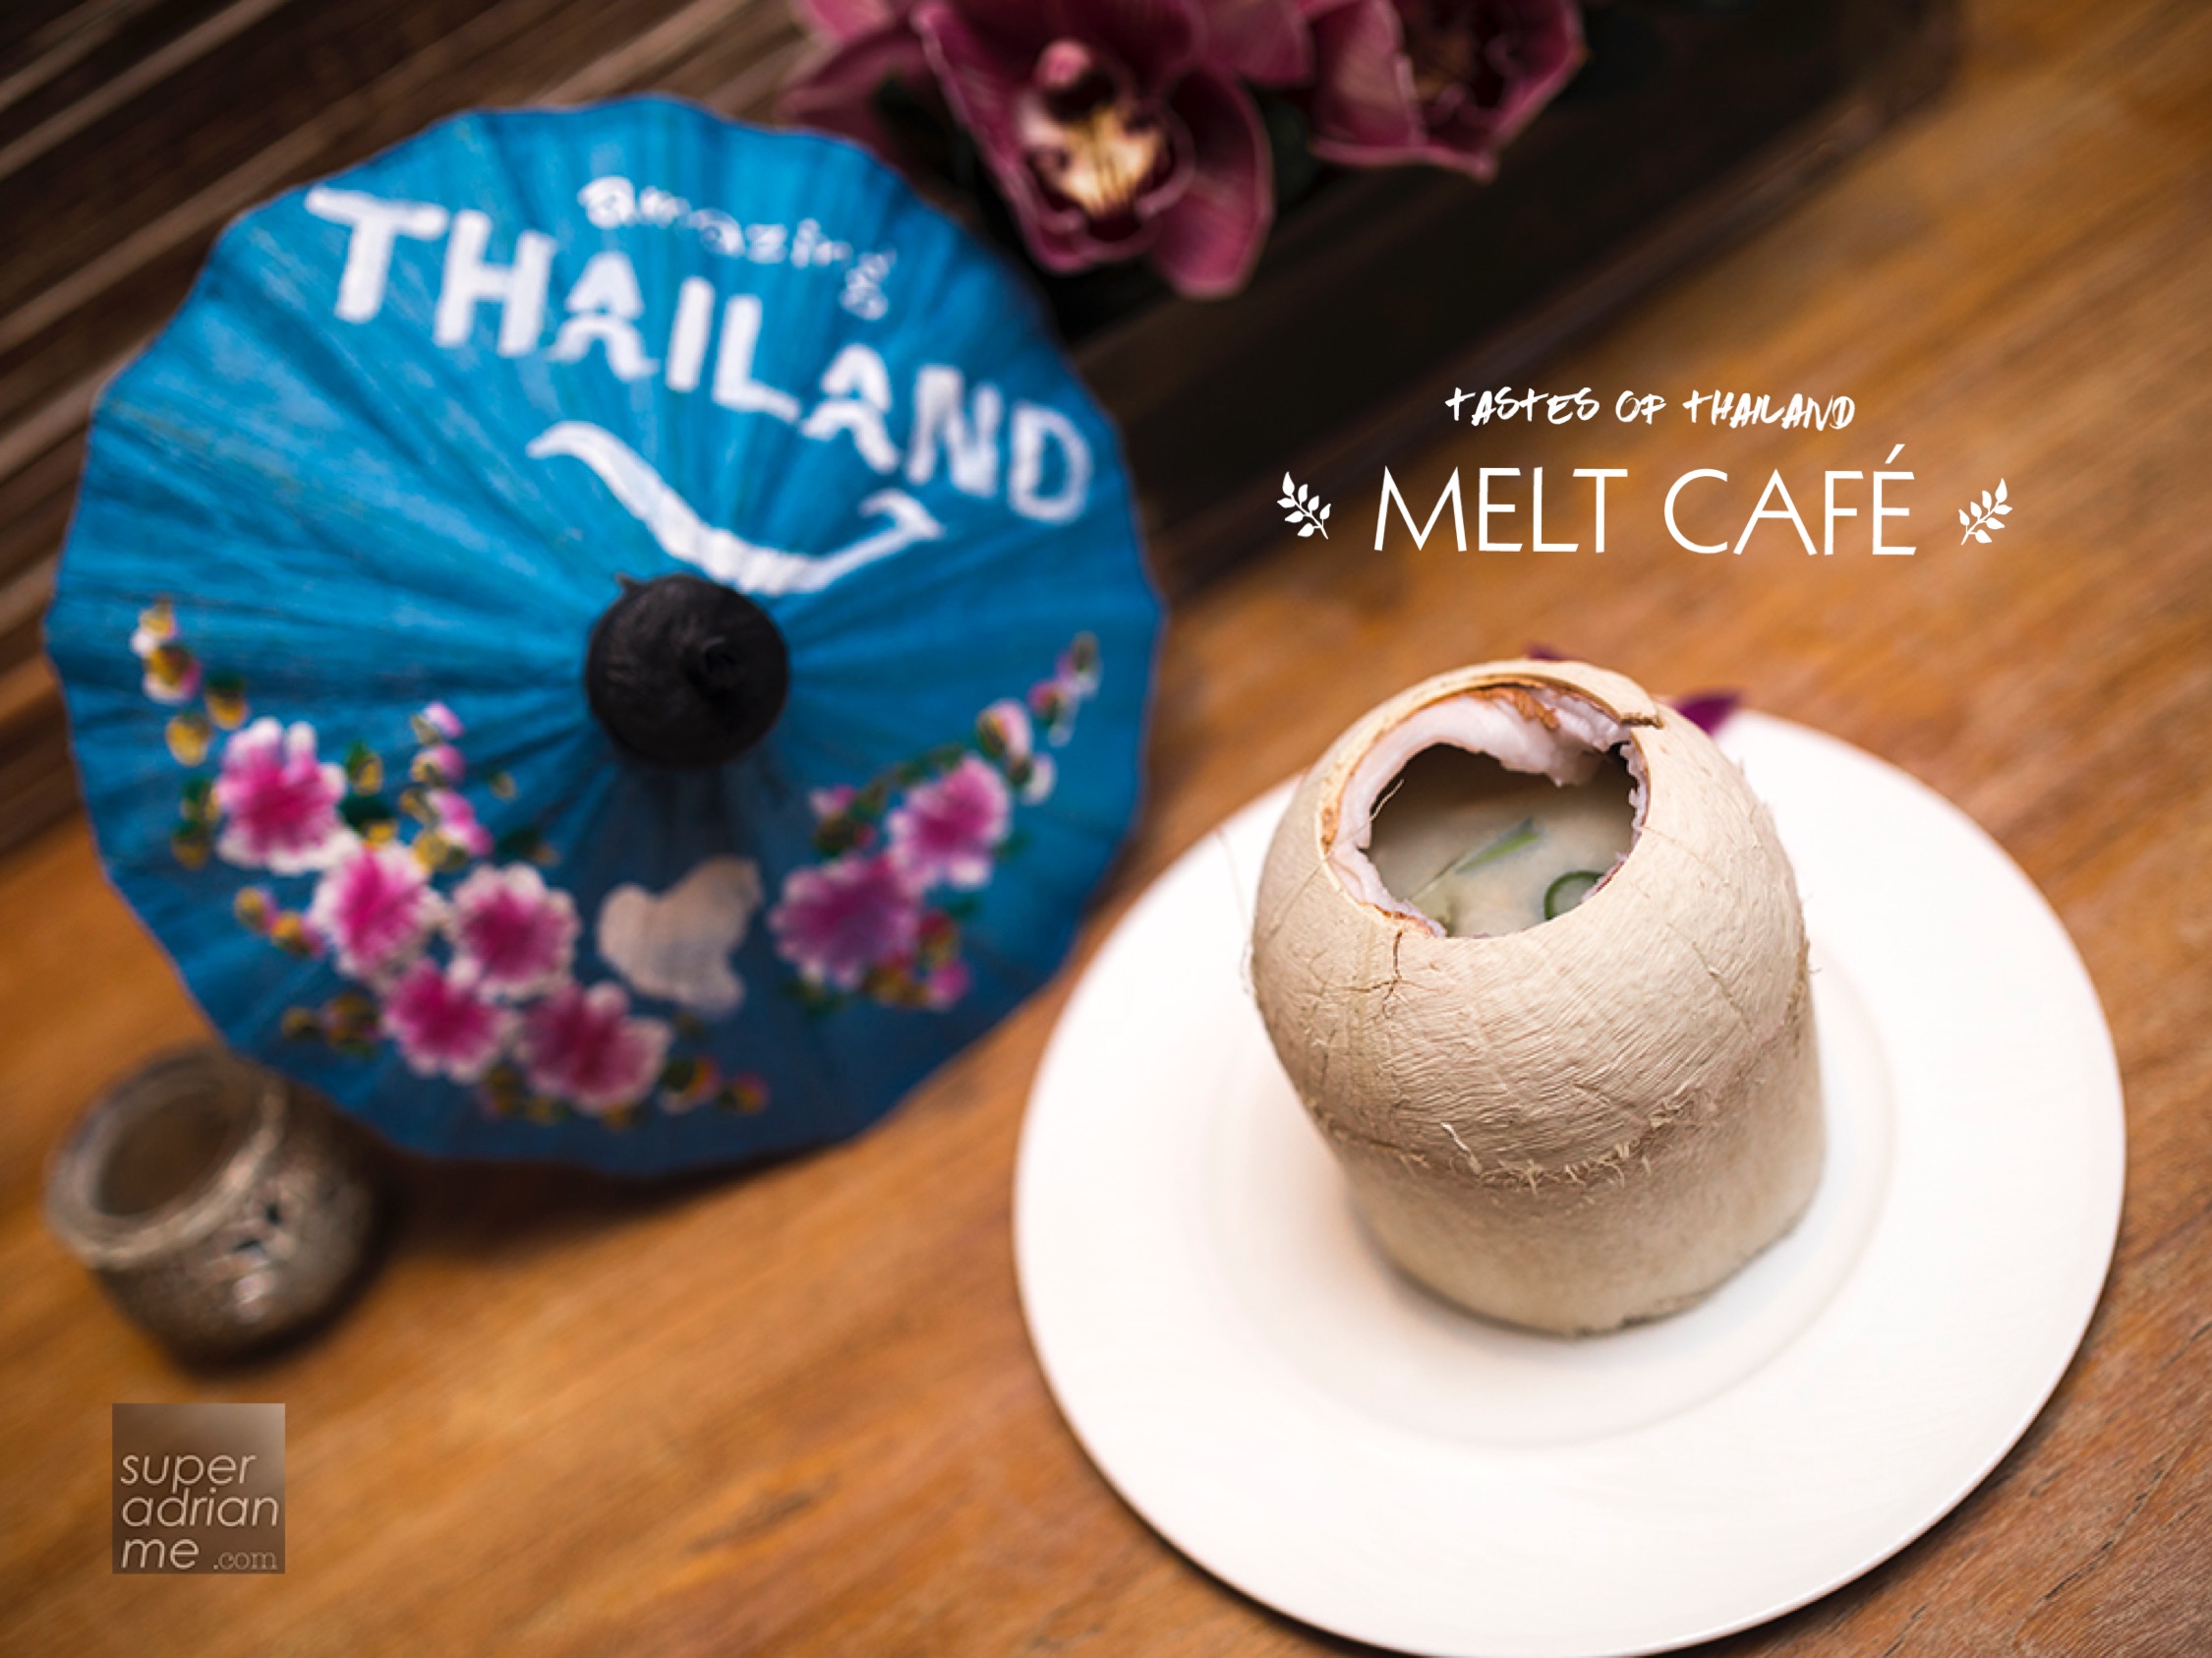 Tastes of Thailand - Melt Cafe